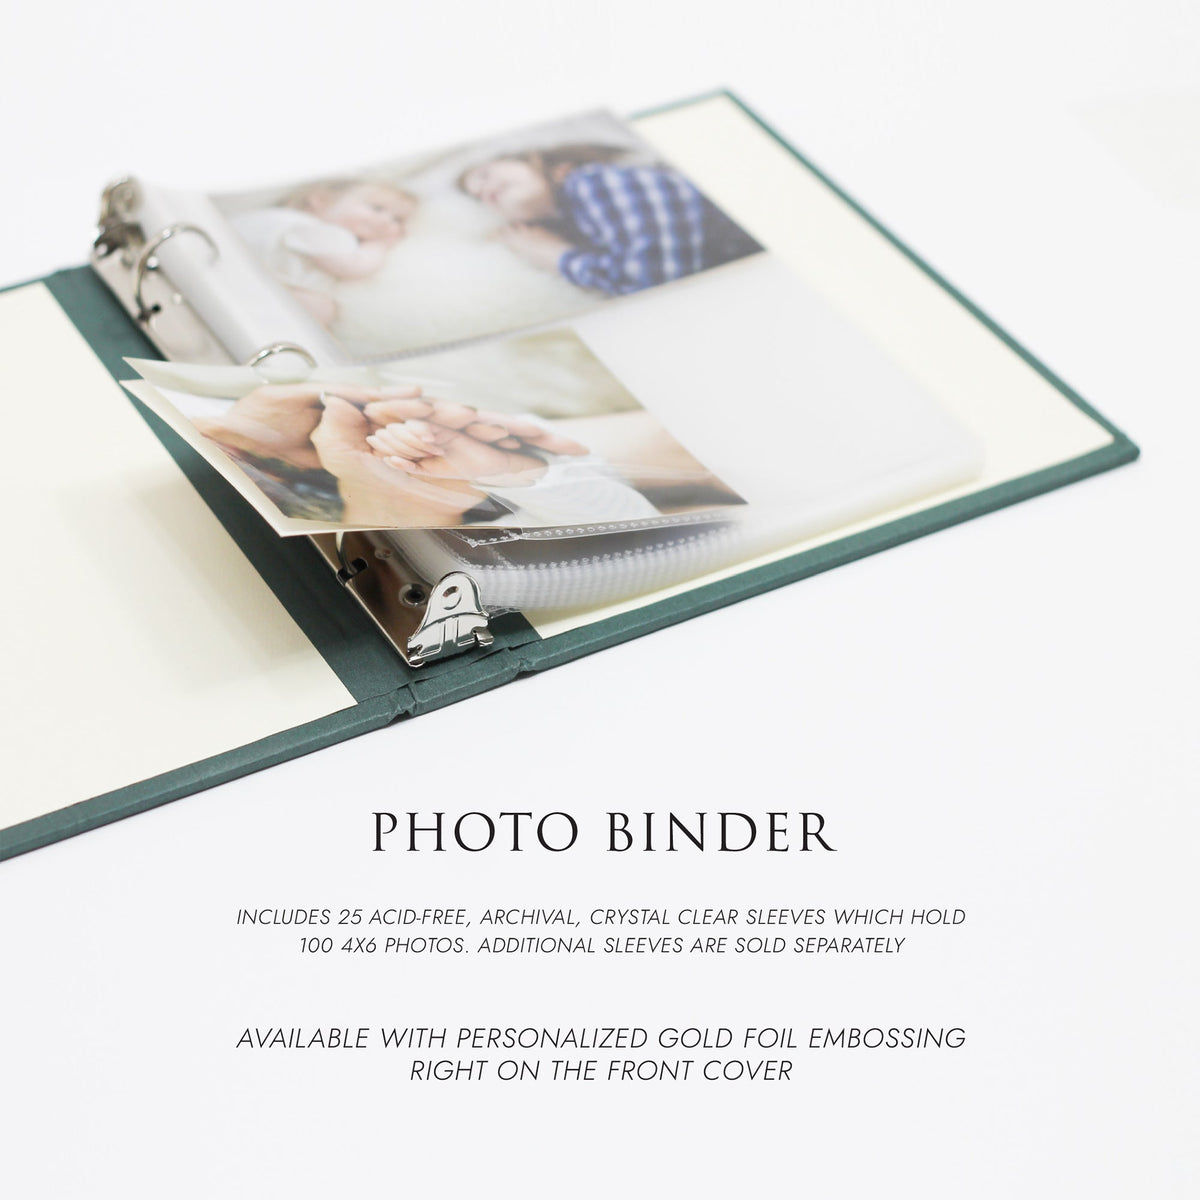 Medium Photo Binder For 4x6 Photos | Cover: Indigo Vegan Leather | Available Personalized